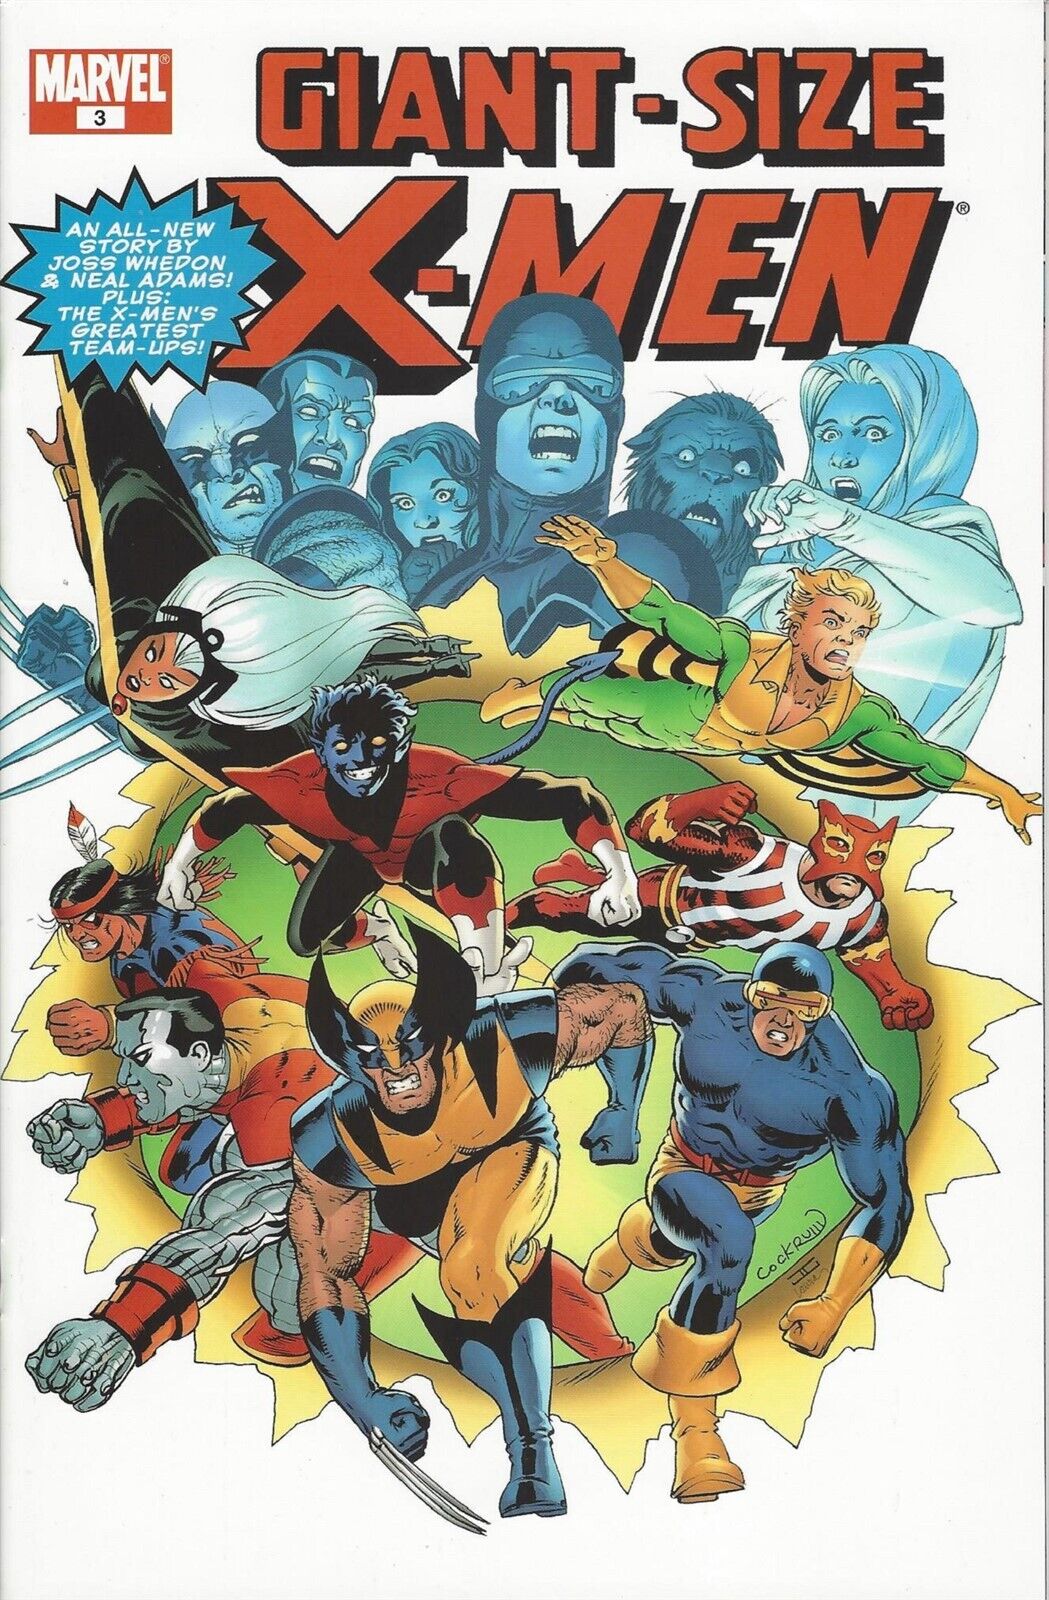 Giant-Size X-Men #3 Teamwork